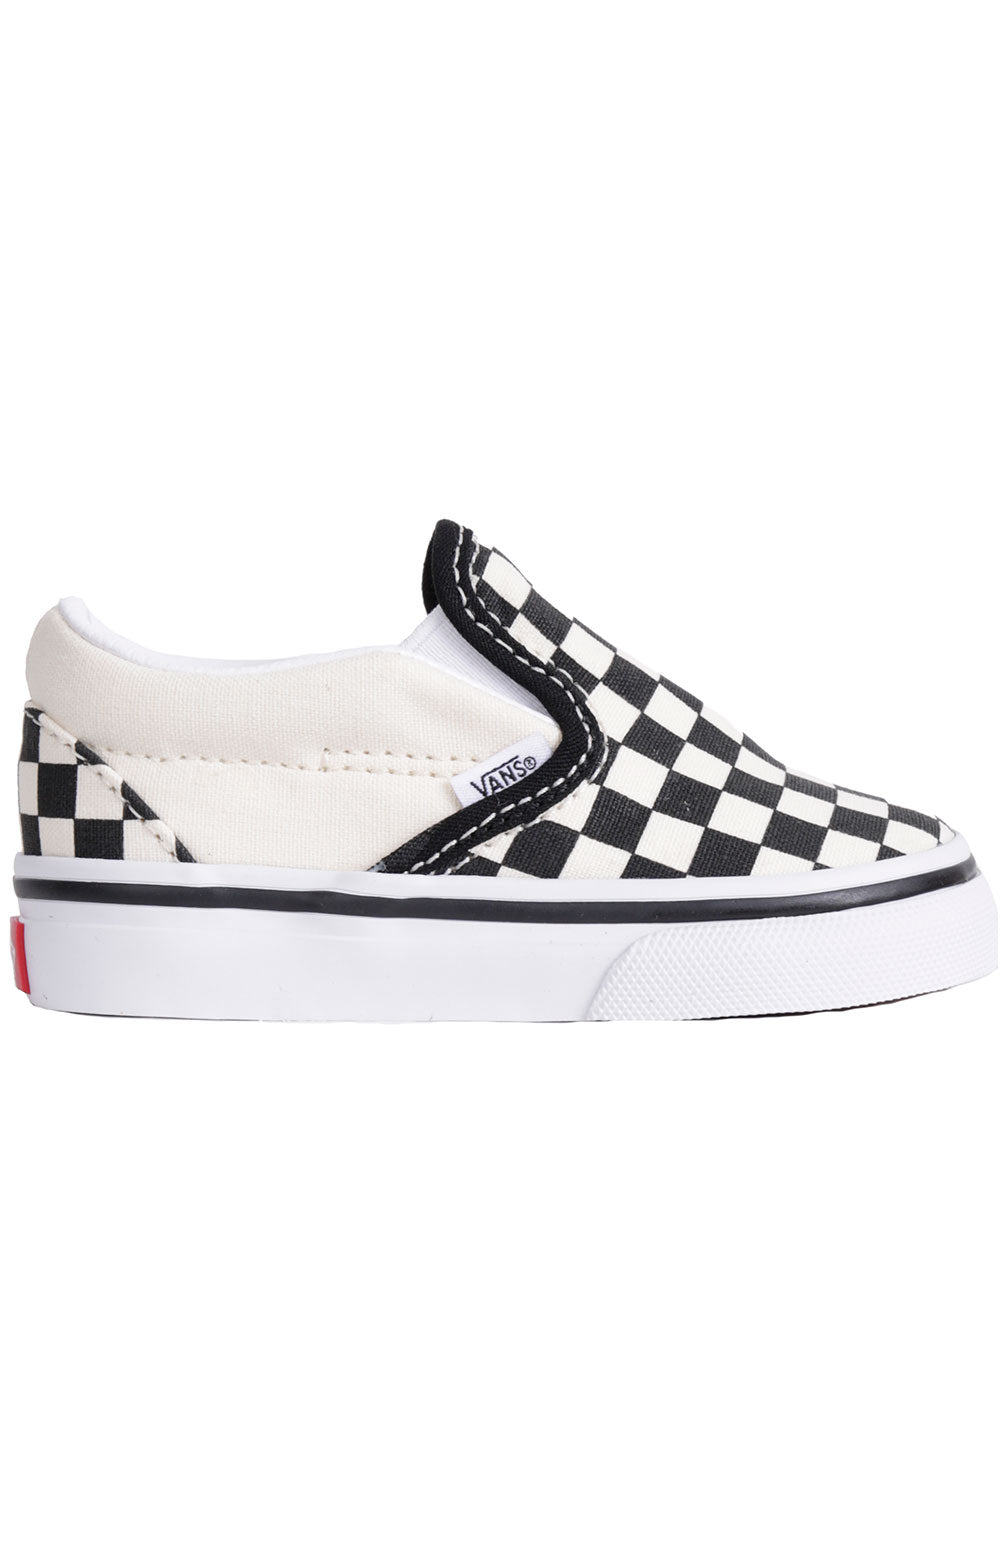 (EX8BWW) Classic Slip-On Shoes - Black/White